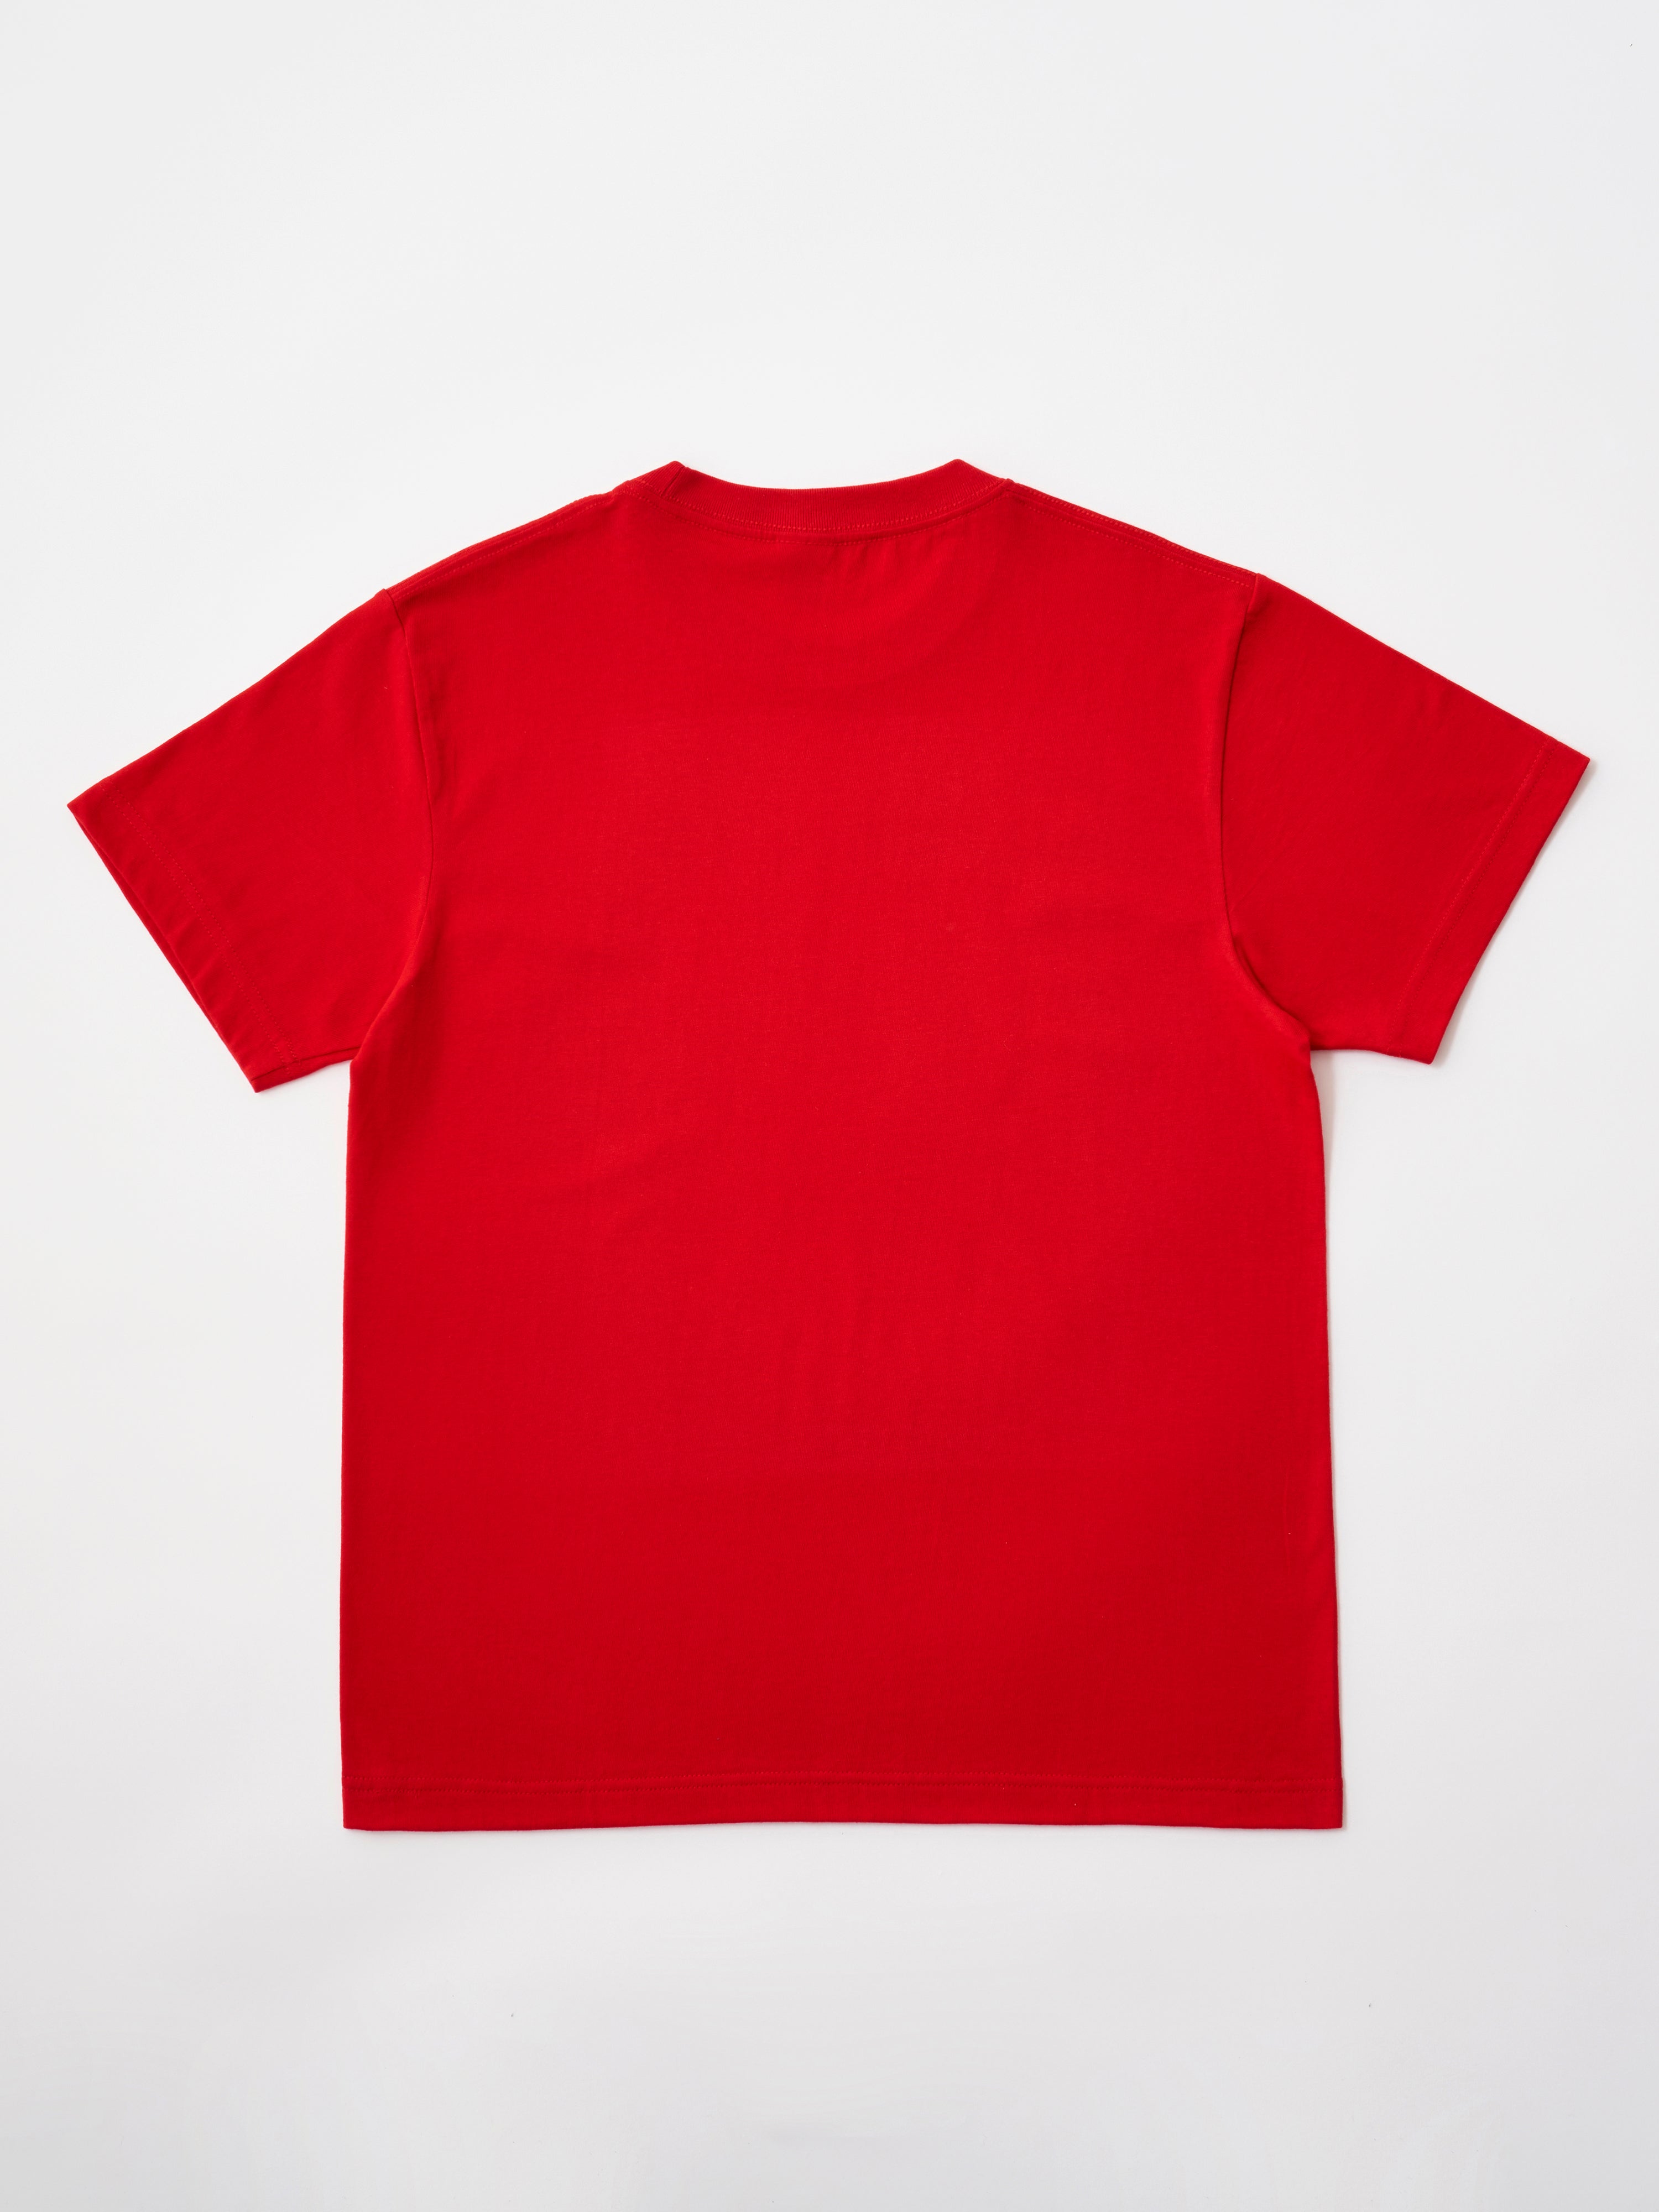 Komari Kumuma Life is Puzzle T -shirt (red)